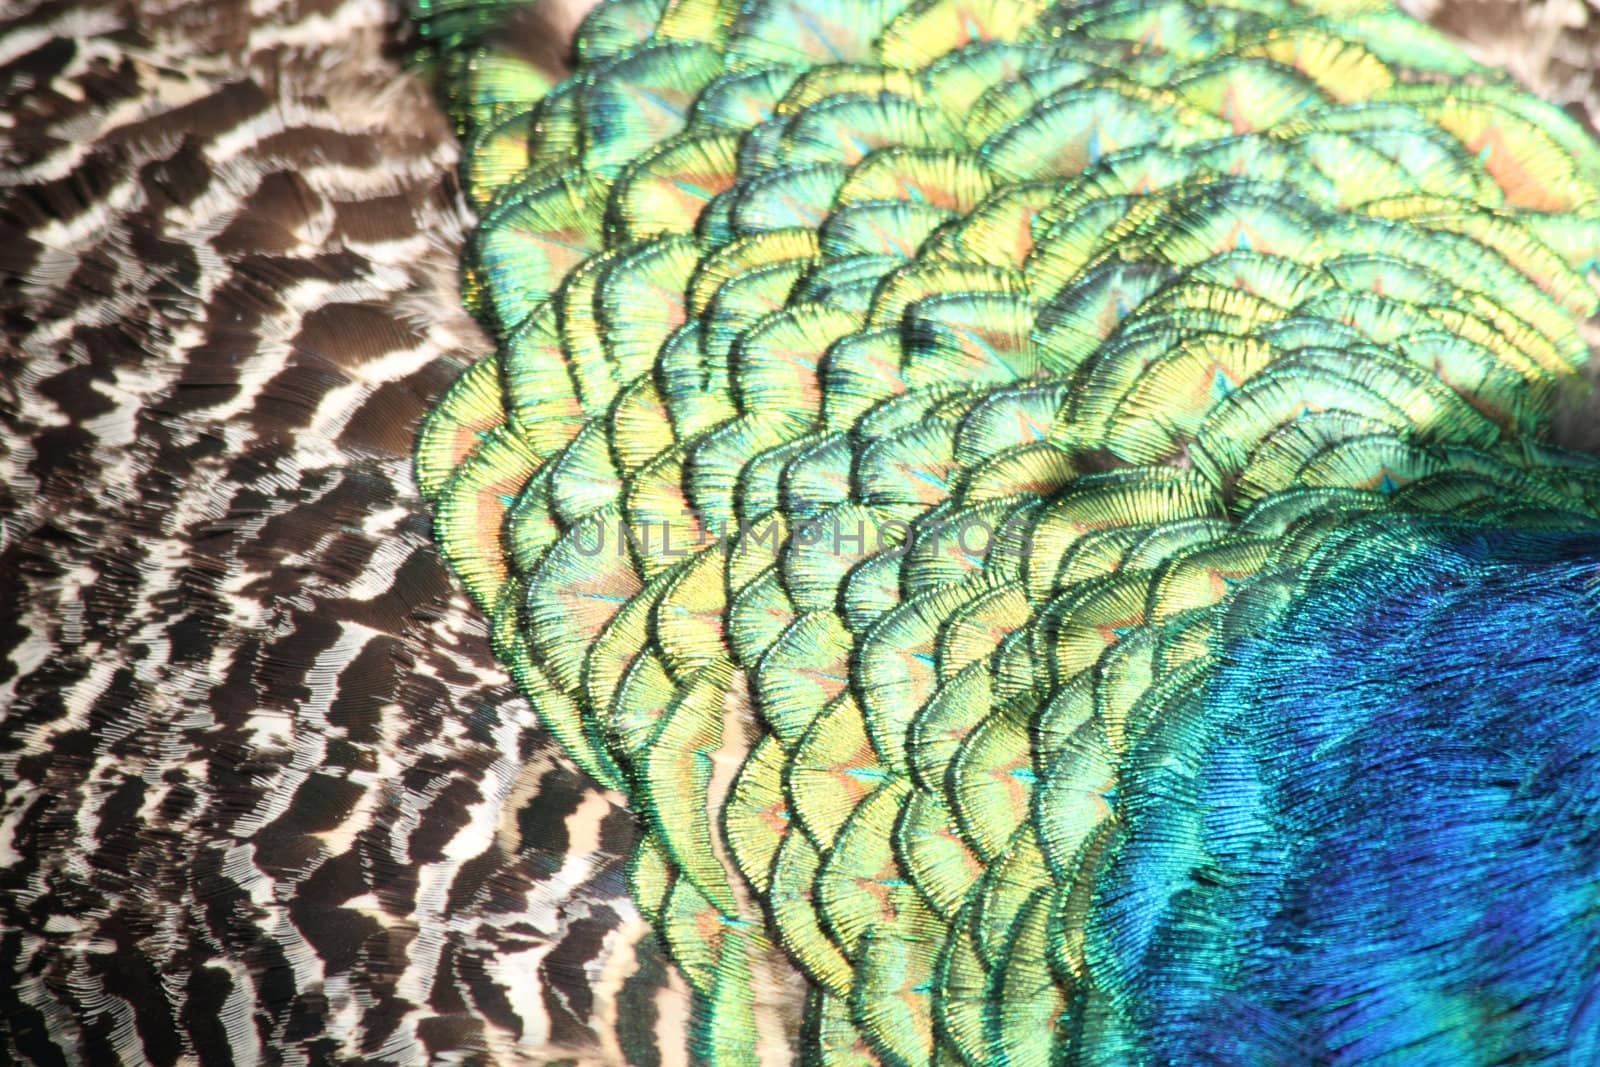 peacock texture by jonnysek